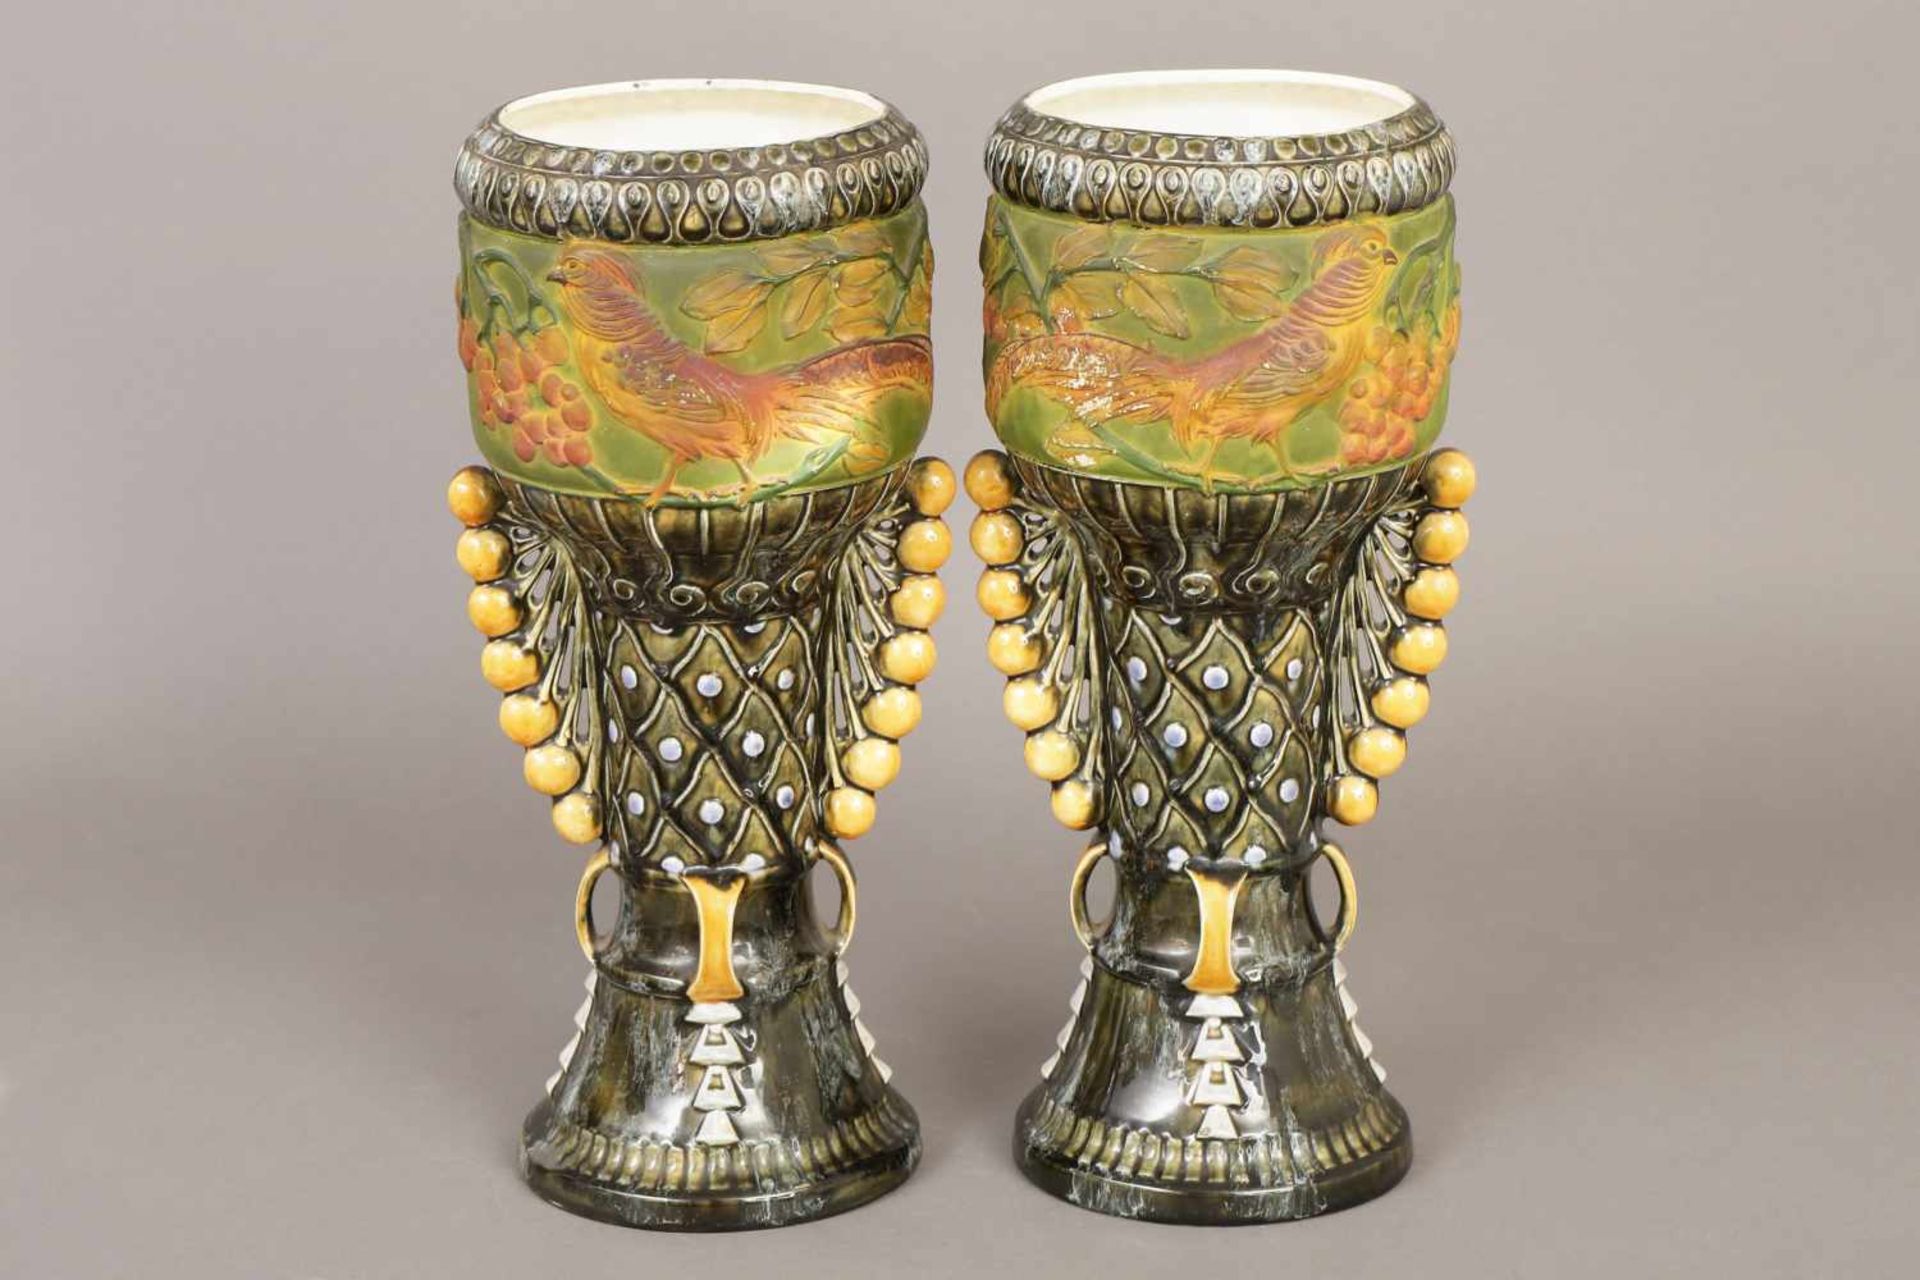 Paar Majolika Kaminvasenunbekannte Manufaktur, um 1900/20, hoher pokalförmiger Korpus, 2 seitliche